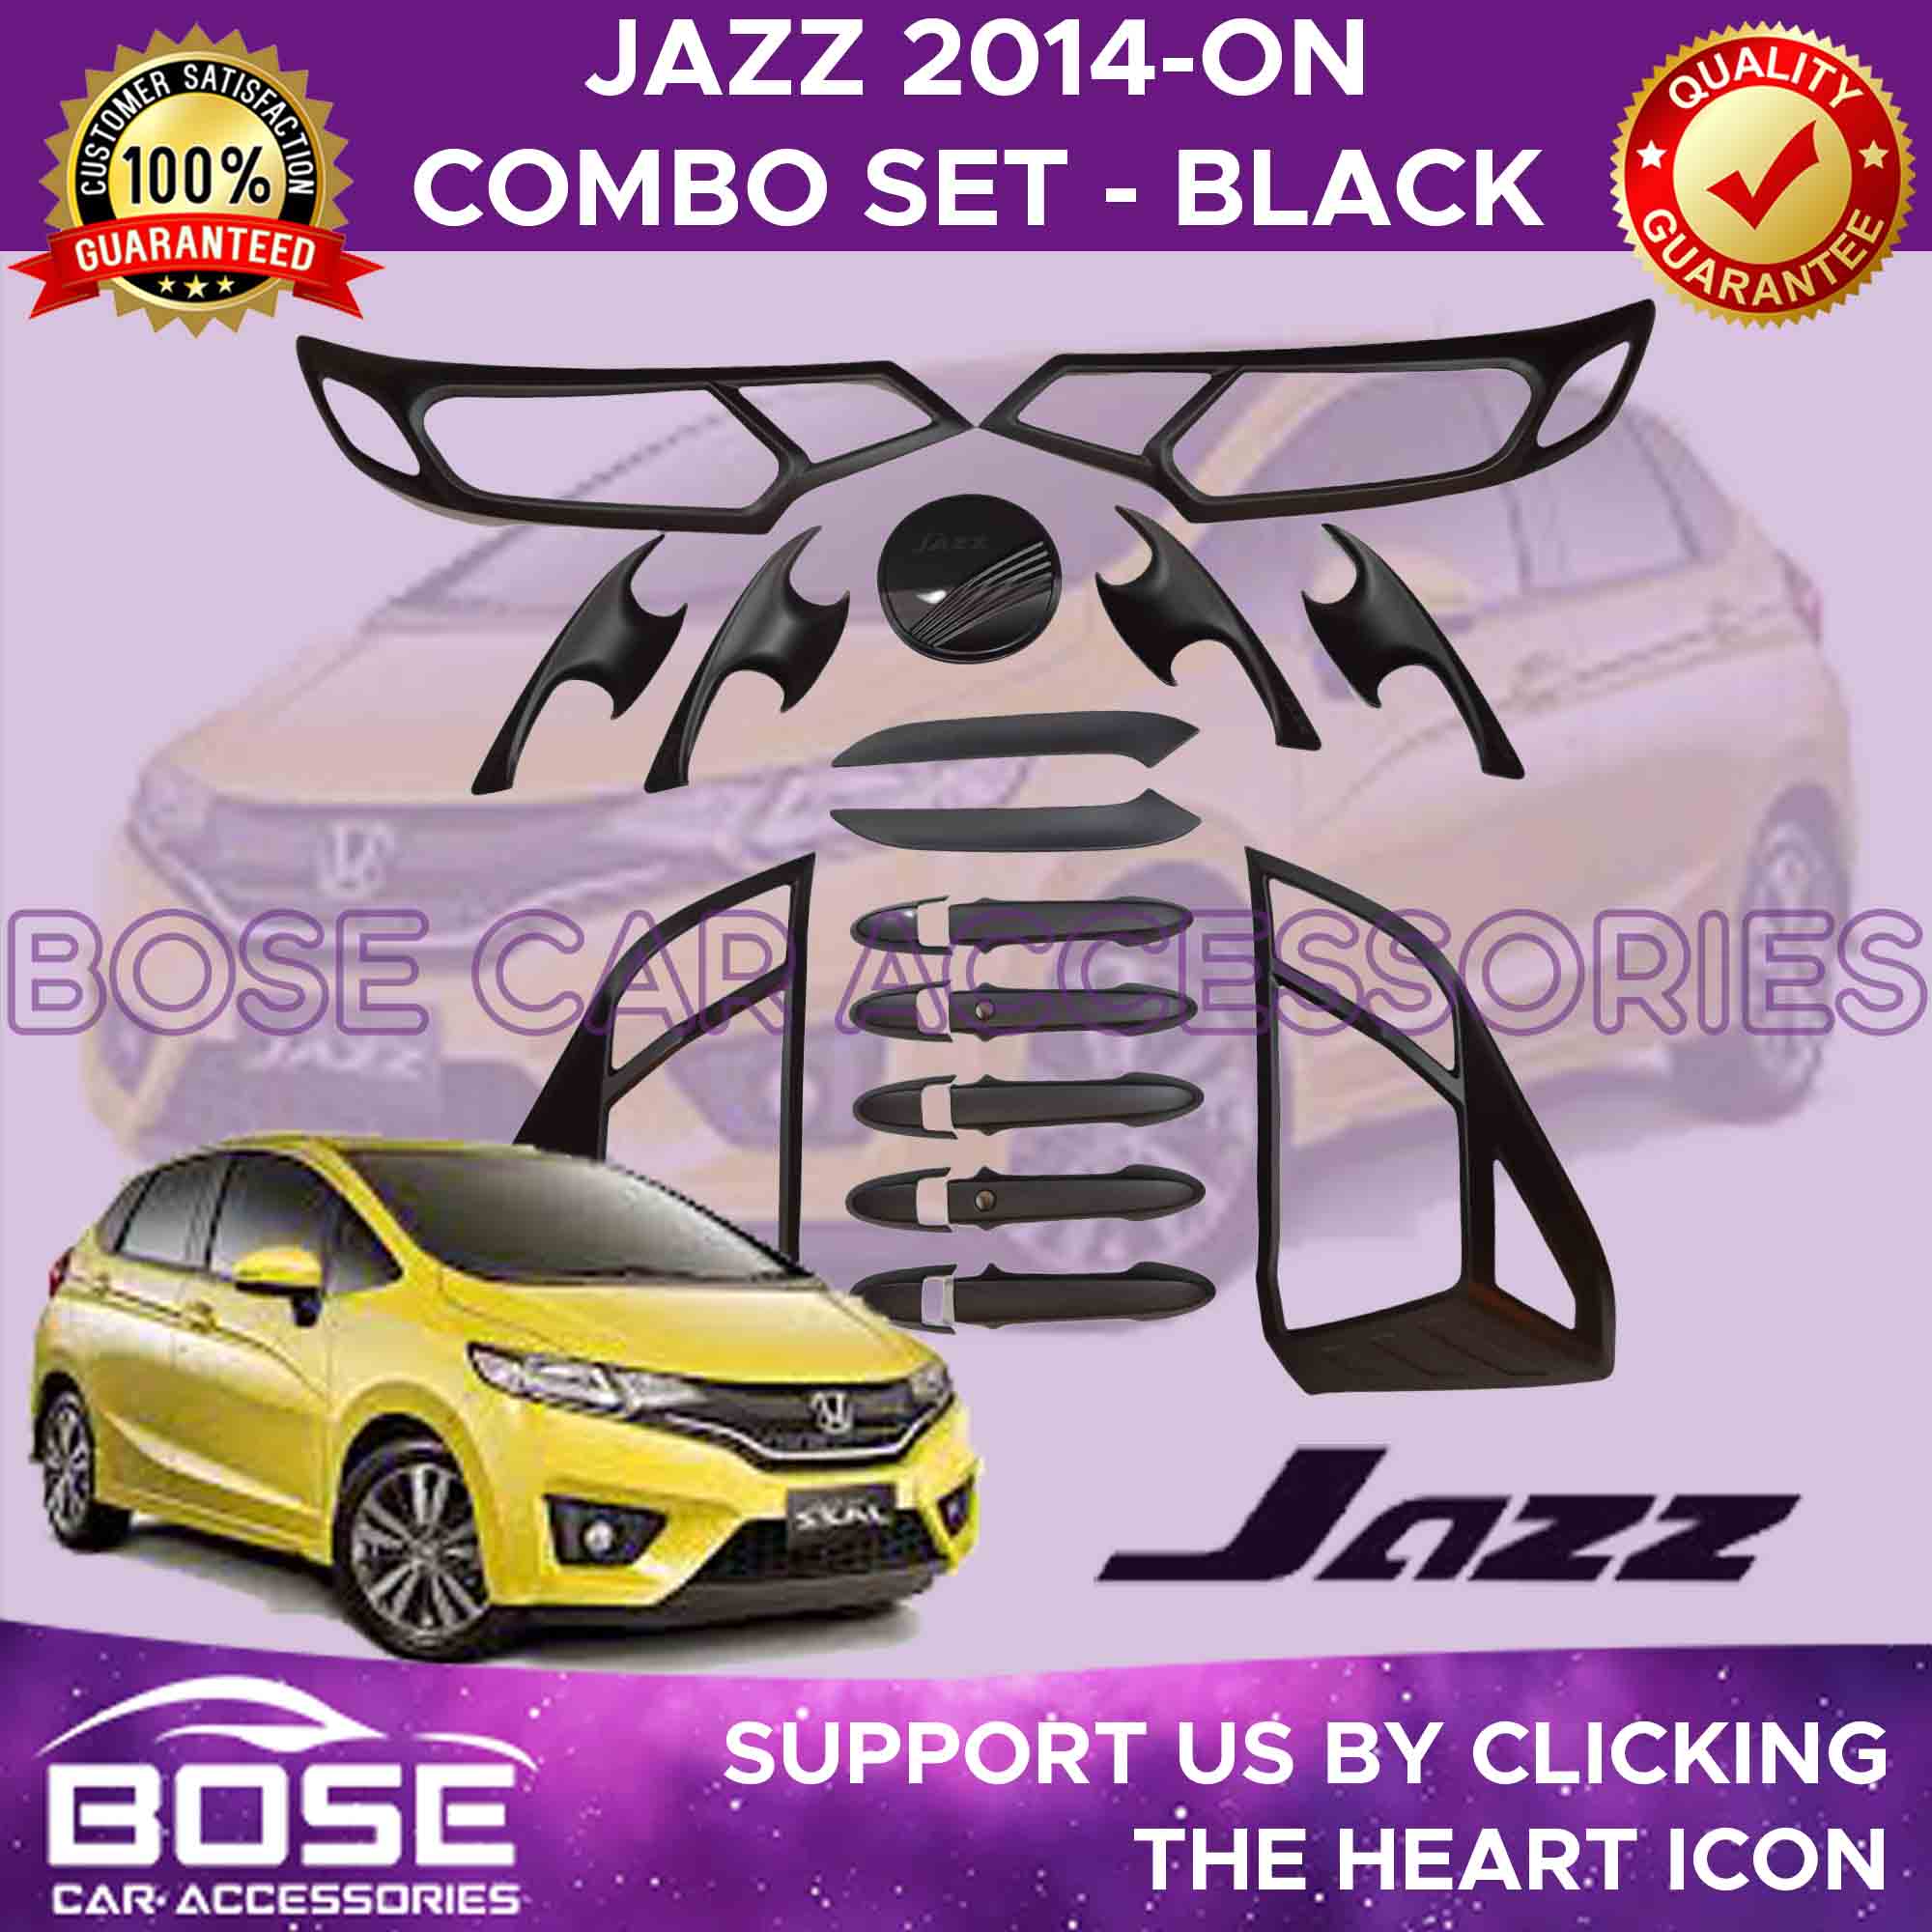 Honda Jazz Garnish Set 2014 2015 2017 2019 2020 2021 2022 Black / Chrome Jazz Accessories Parts / Garnish Cover Jazz Combo Set / Light Cover / Tail